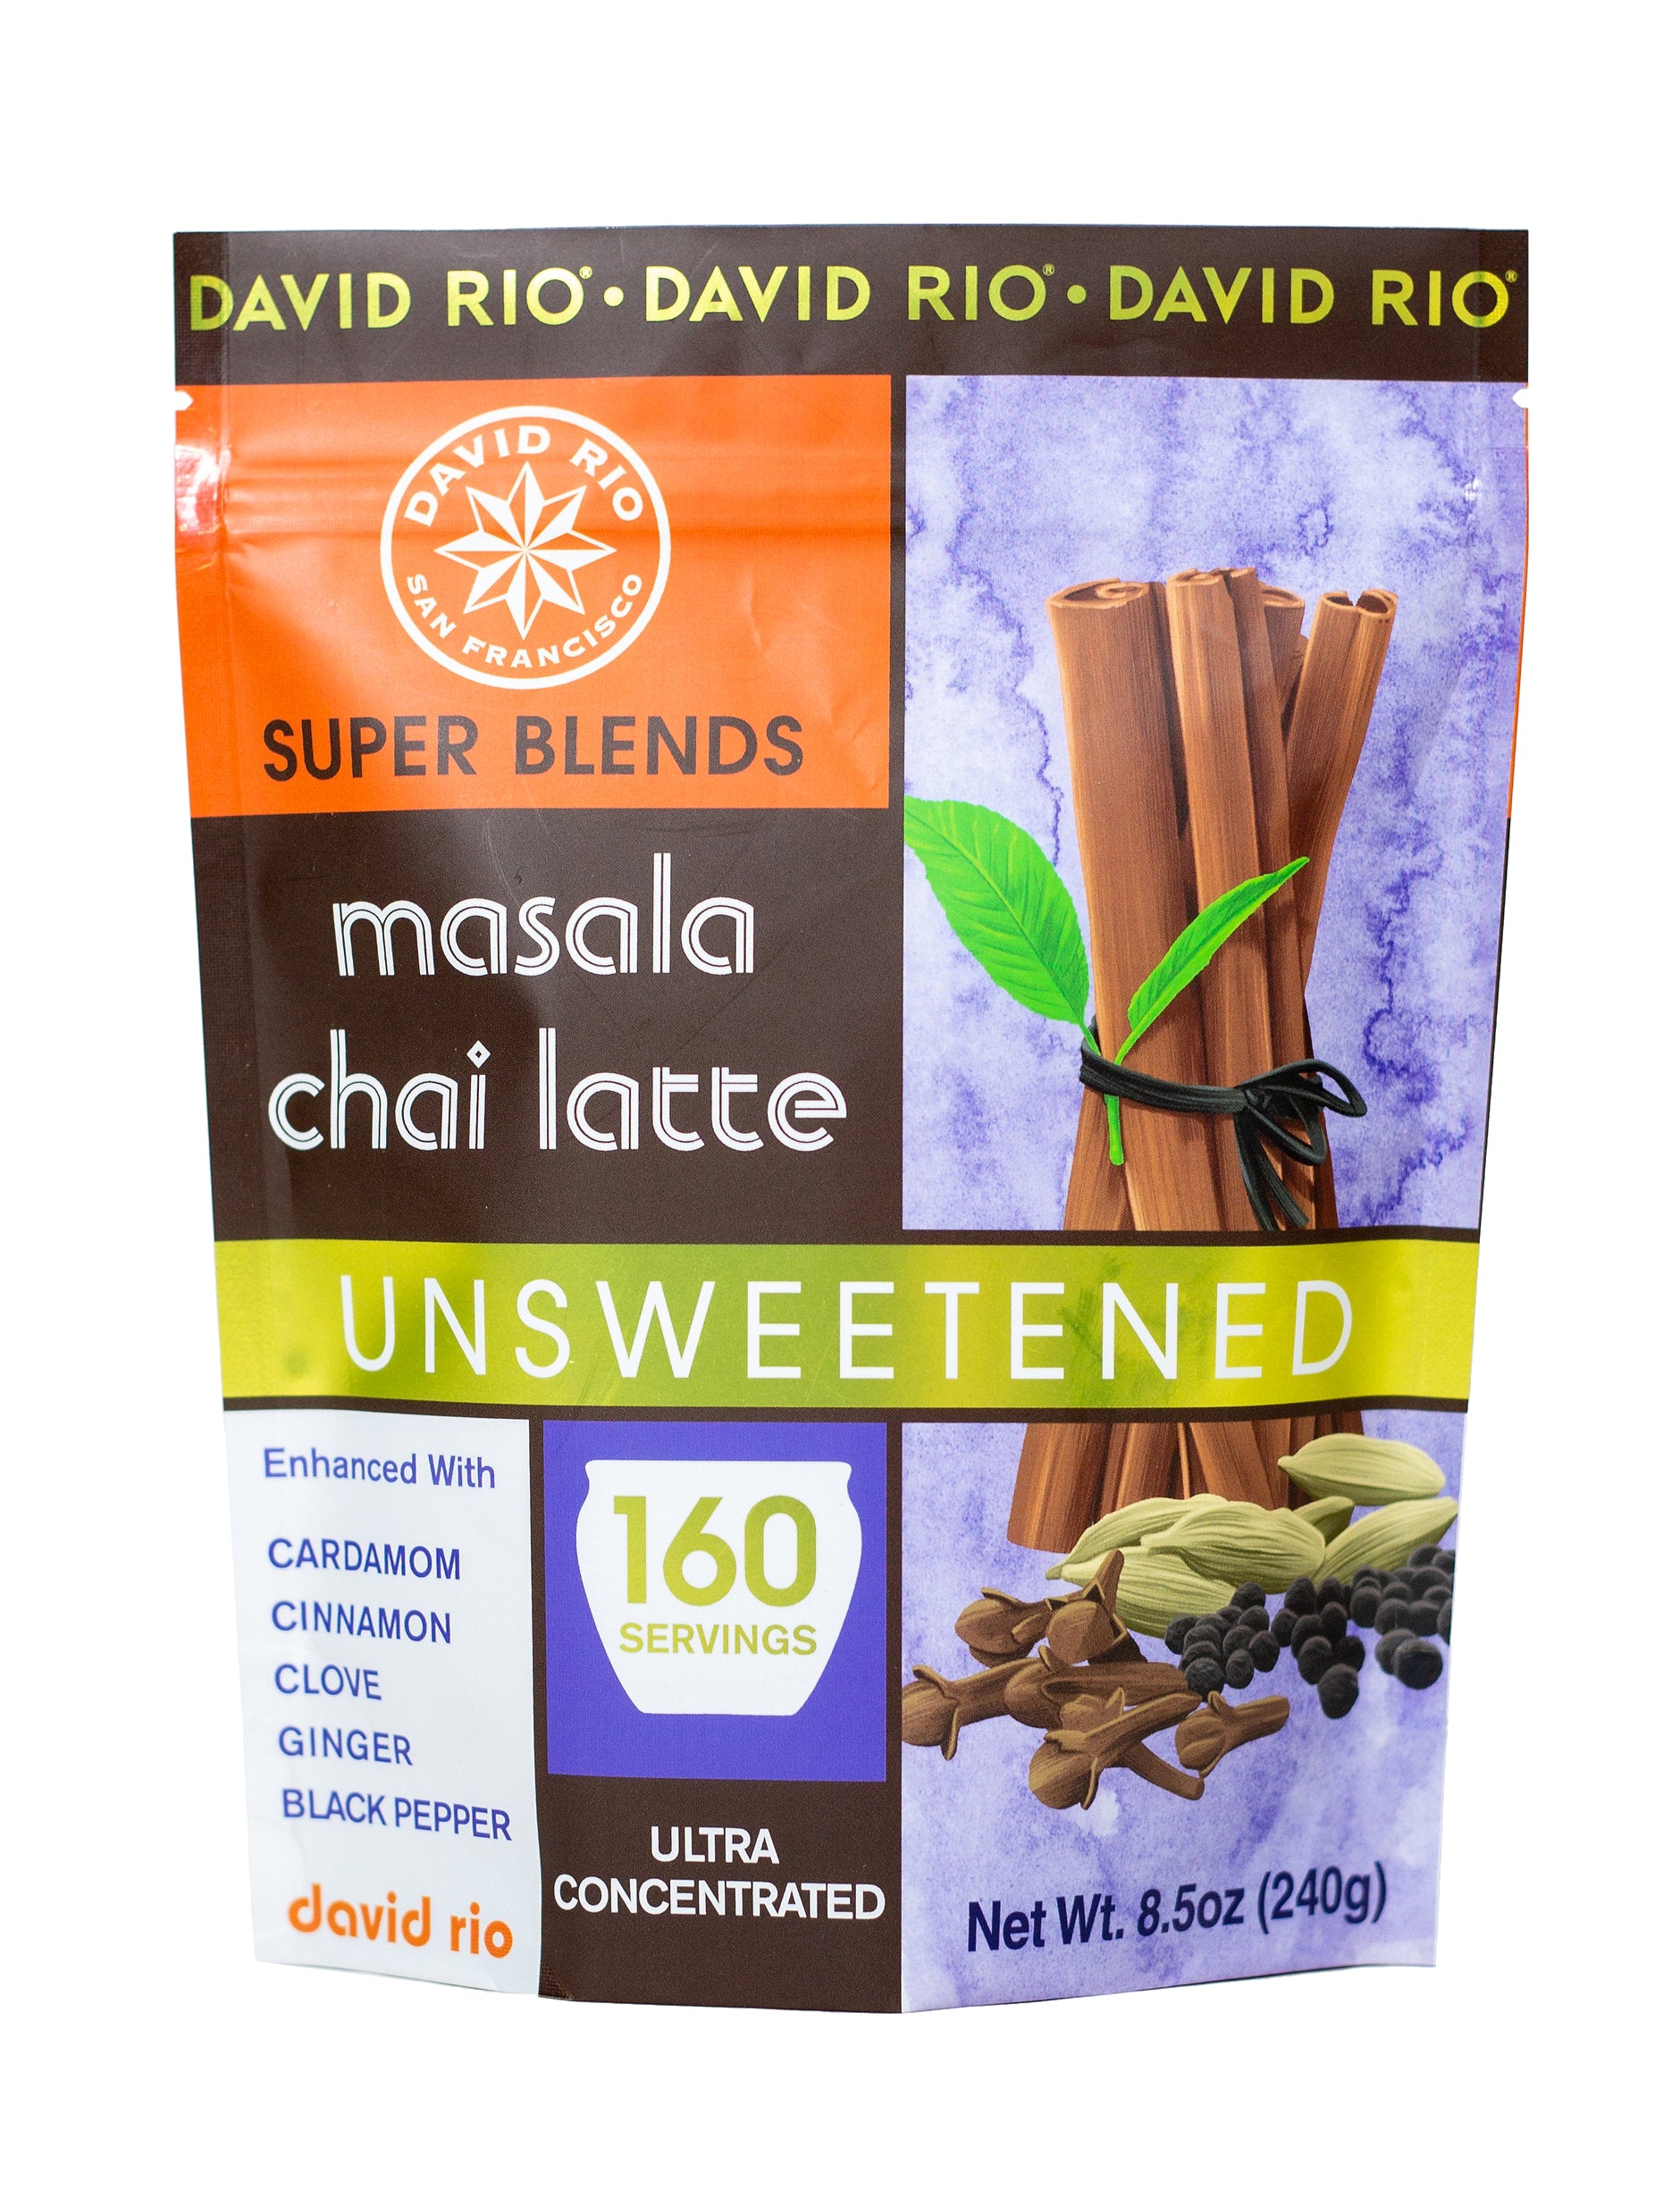 David Rio Super Blends: Unsweetened Masala Chai Latte - 8.5oz Pouch-1